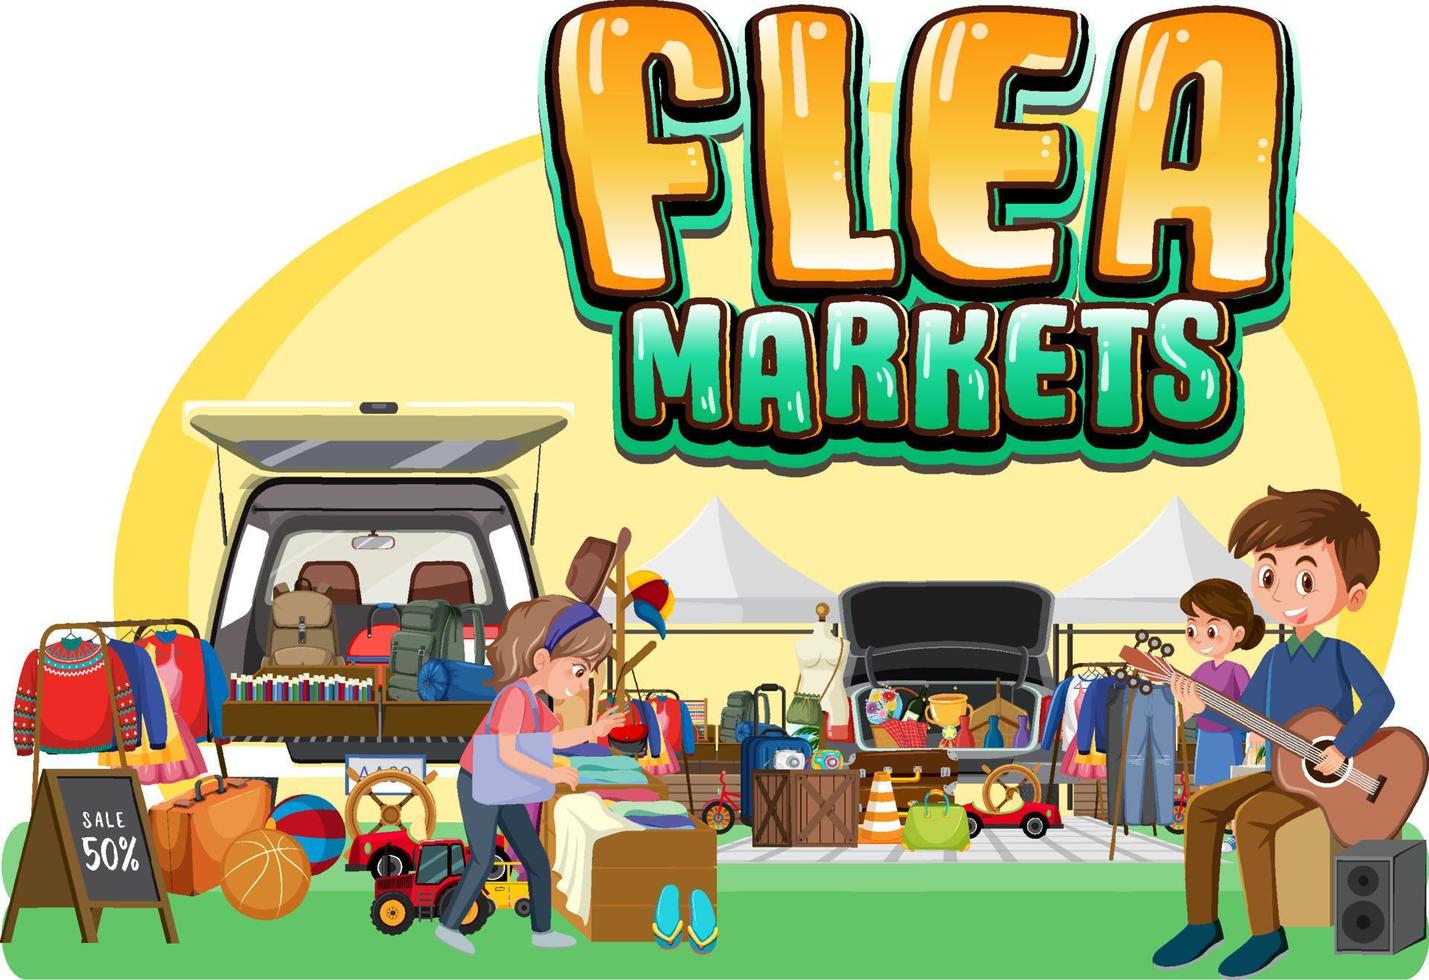 Flea market concept with merchant cartoon character vector